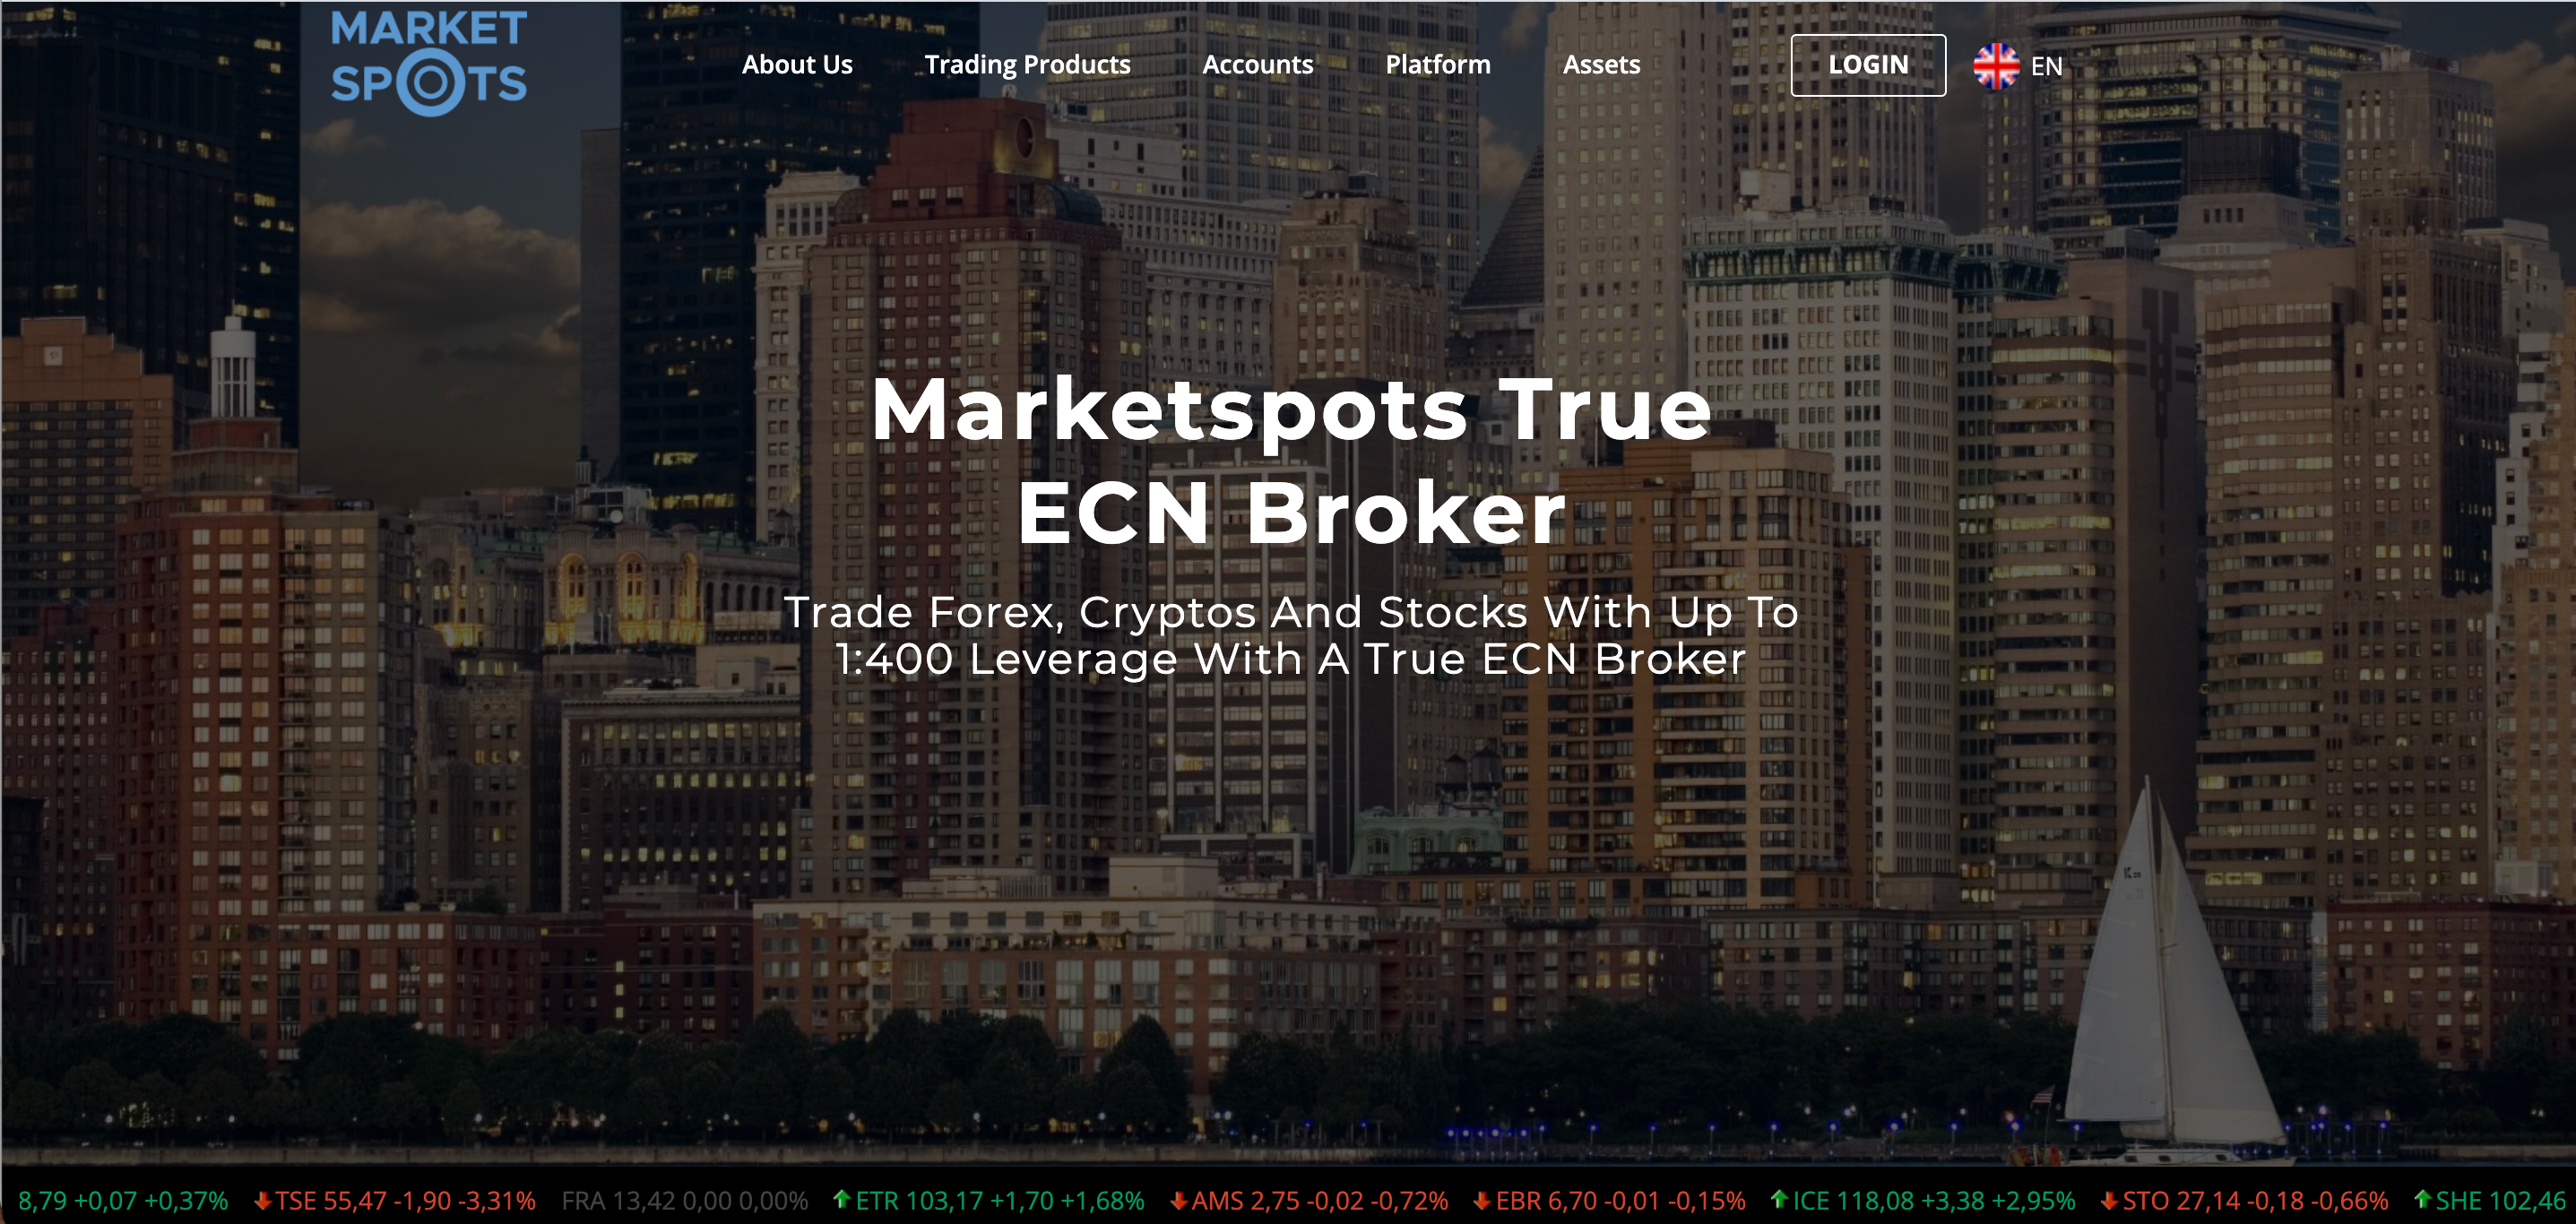 Market Spots website